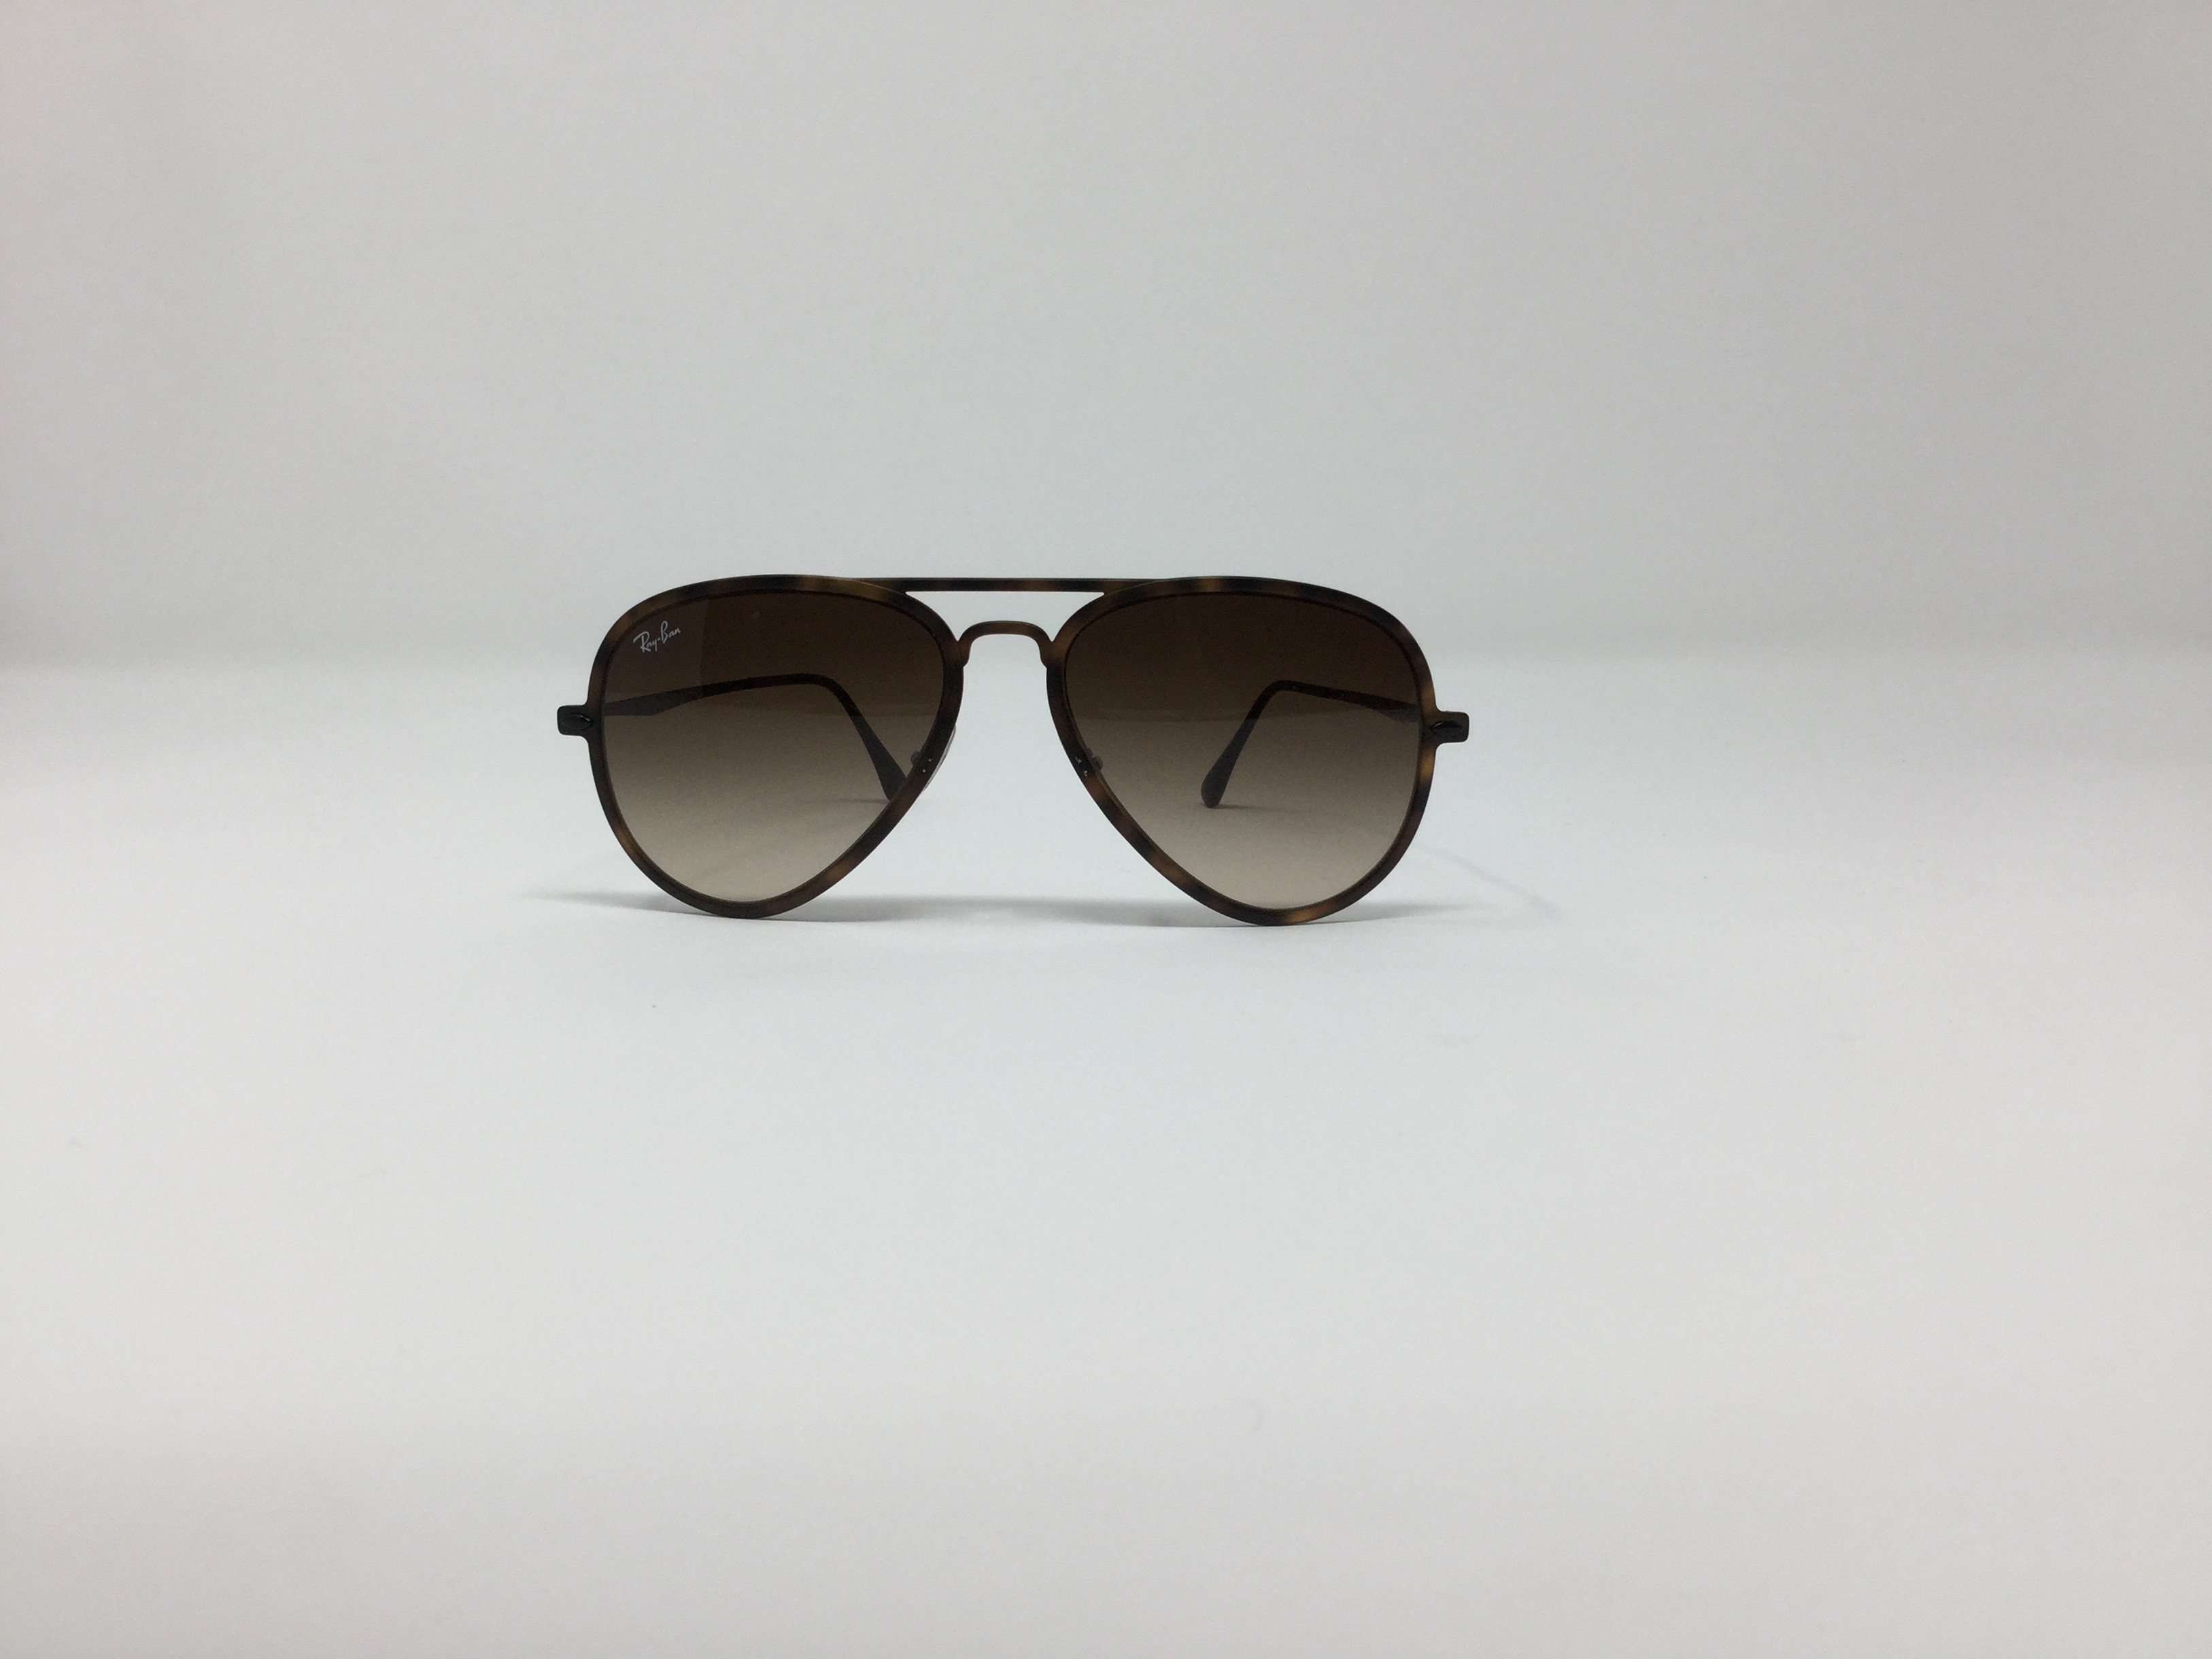 Ray Ban RB 4211 LightRay Unisex Sunglasses - Sunglasses